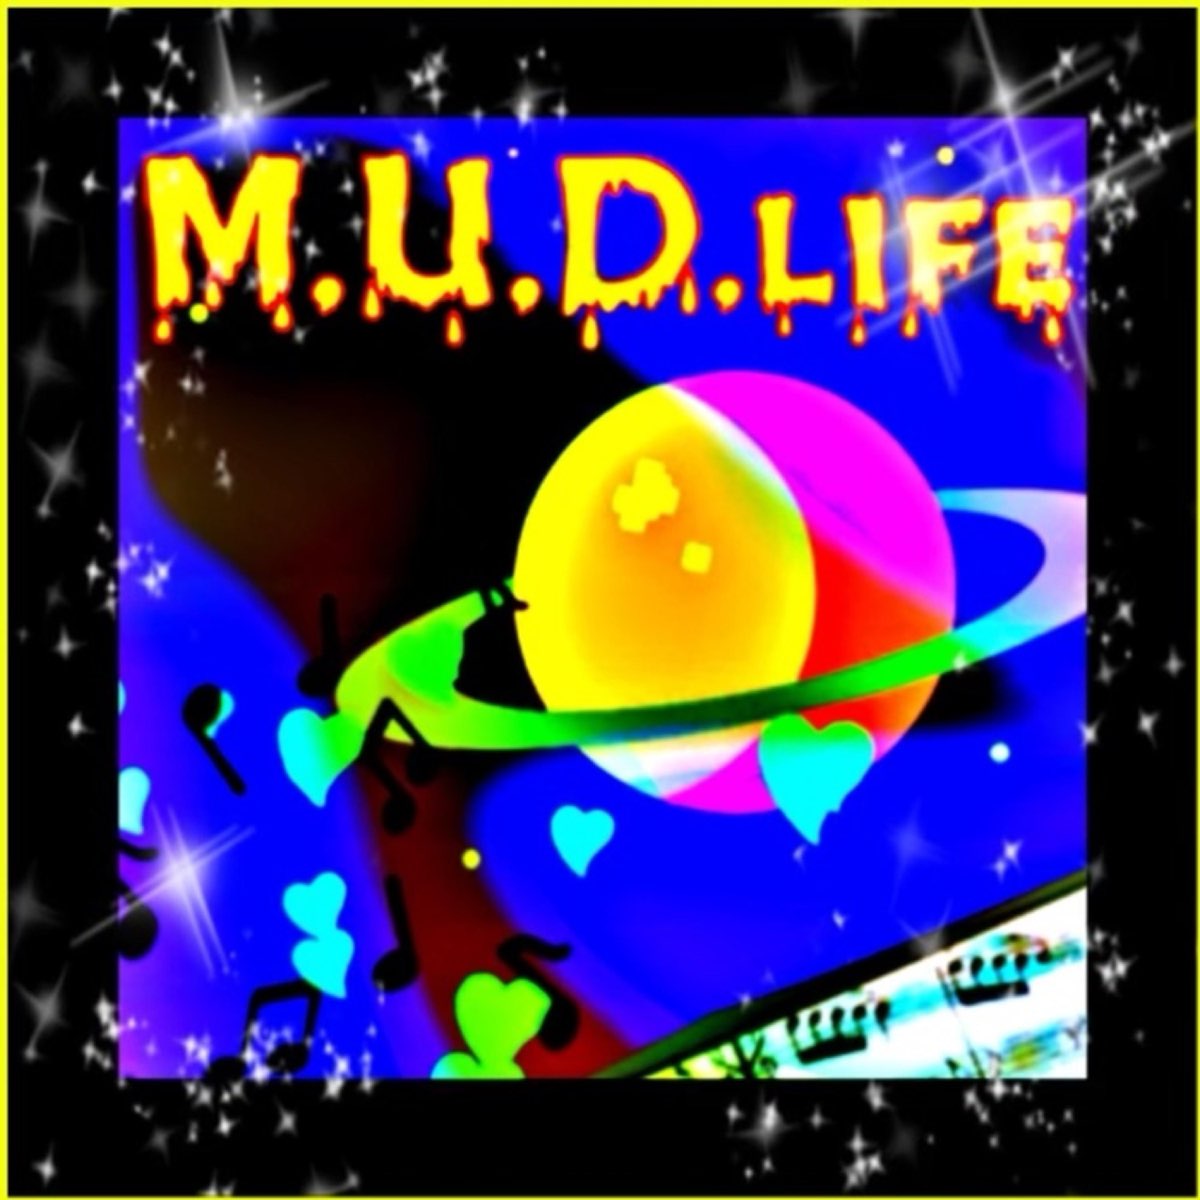 MudLife Roc featuring Danny Boy — Chicago cover artwork